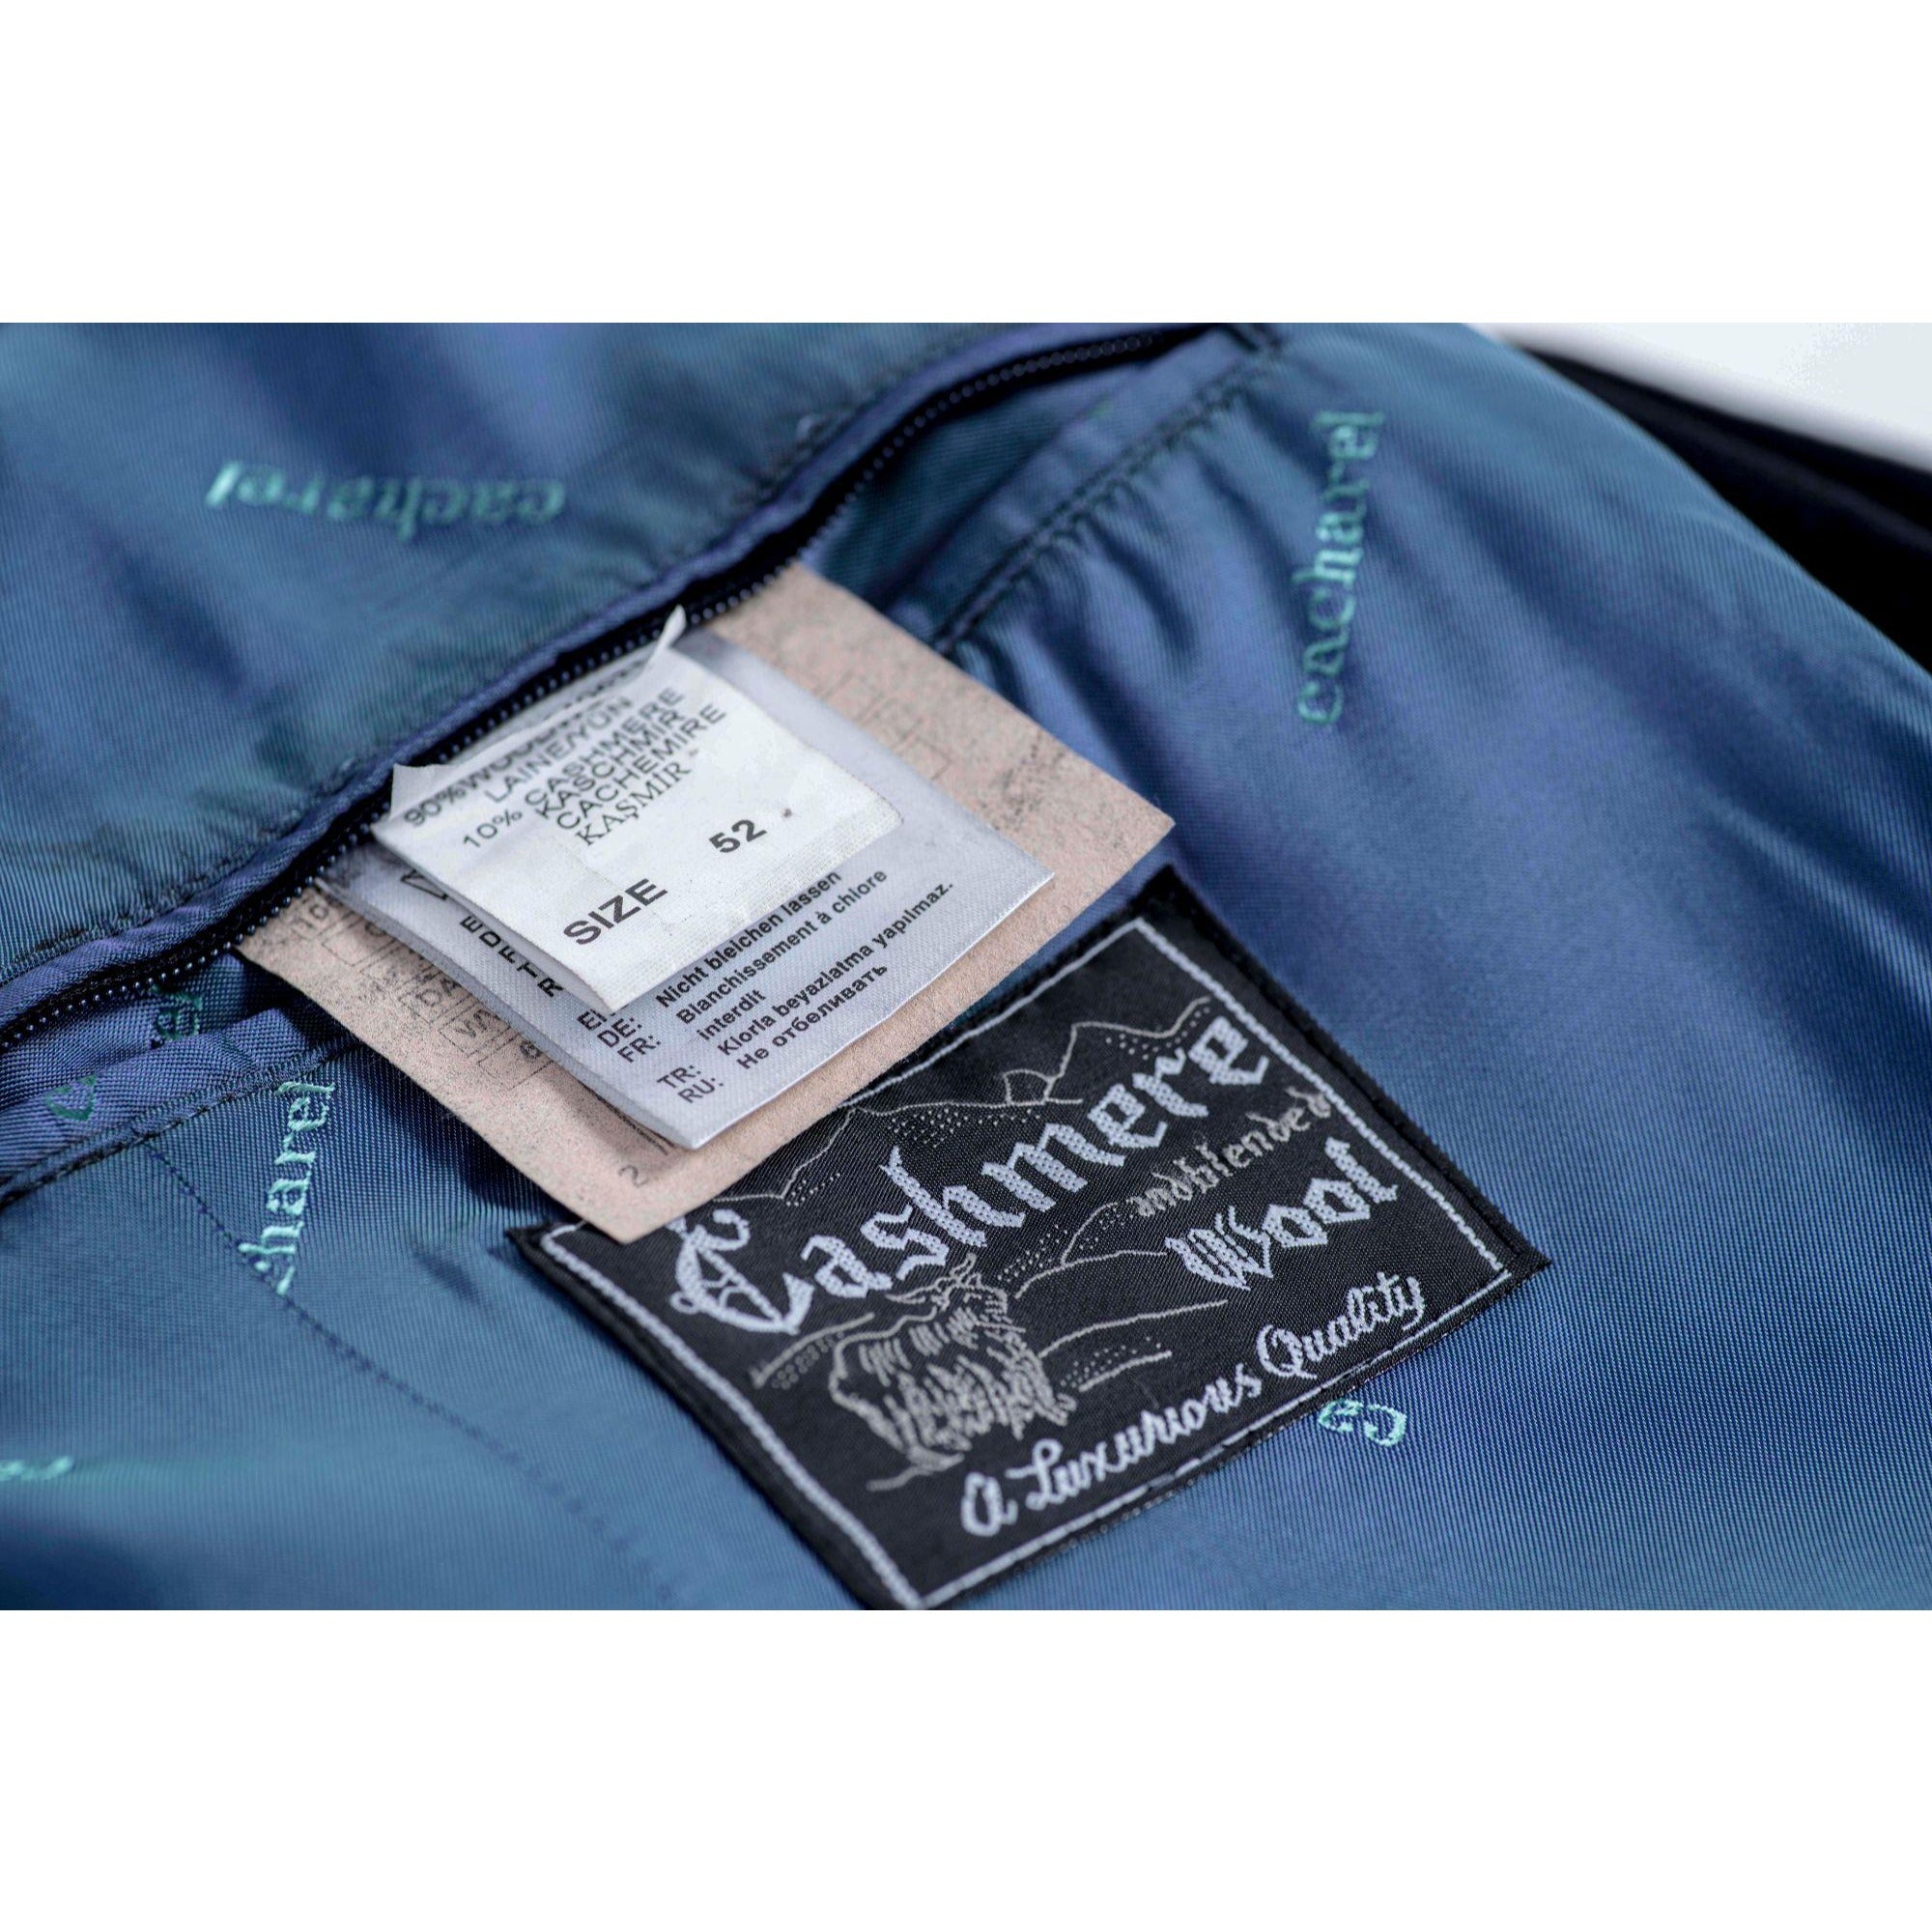 Cacharel Men’s Navy Blue Brushed Wool – Cashmere Blend Coat, SIZE USA 42, EU 52